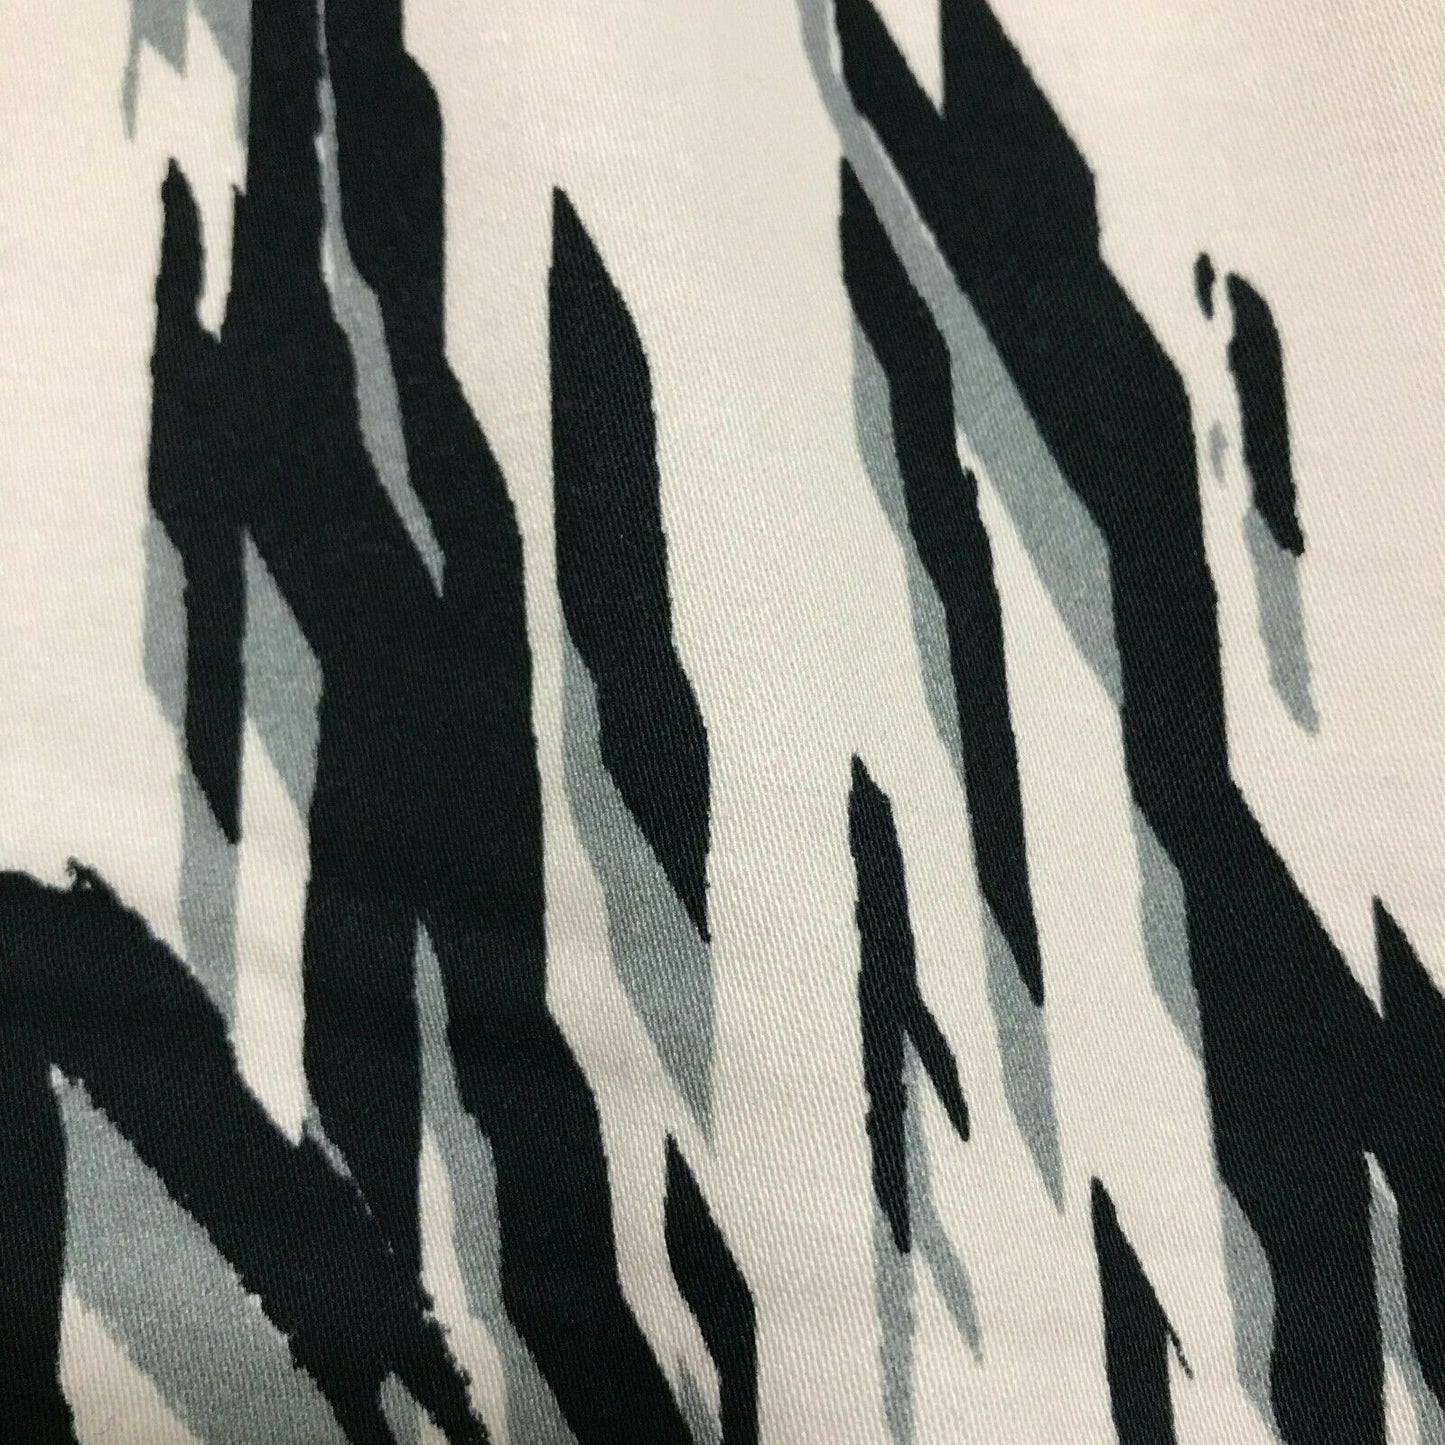 Cotton Satin Fabric Multi Printed Black And White 55" Wide